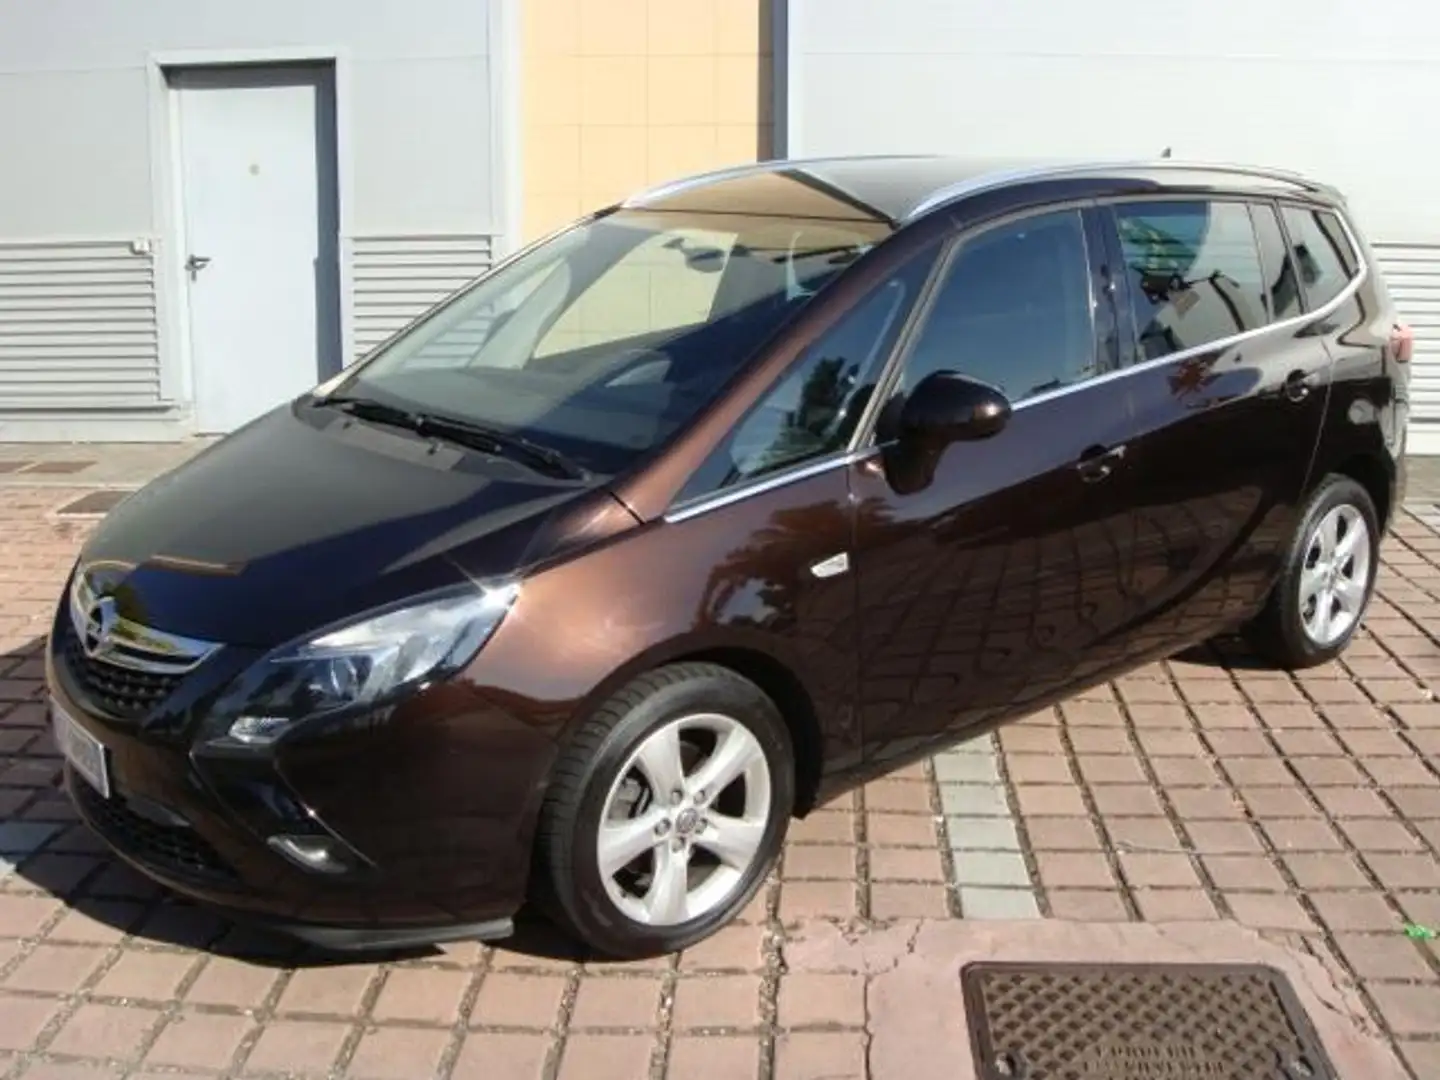 usato Opel Zafira Tourer Monovolume a Carpi- Mo per € 12.000,-